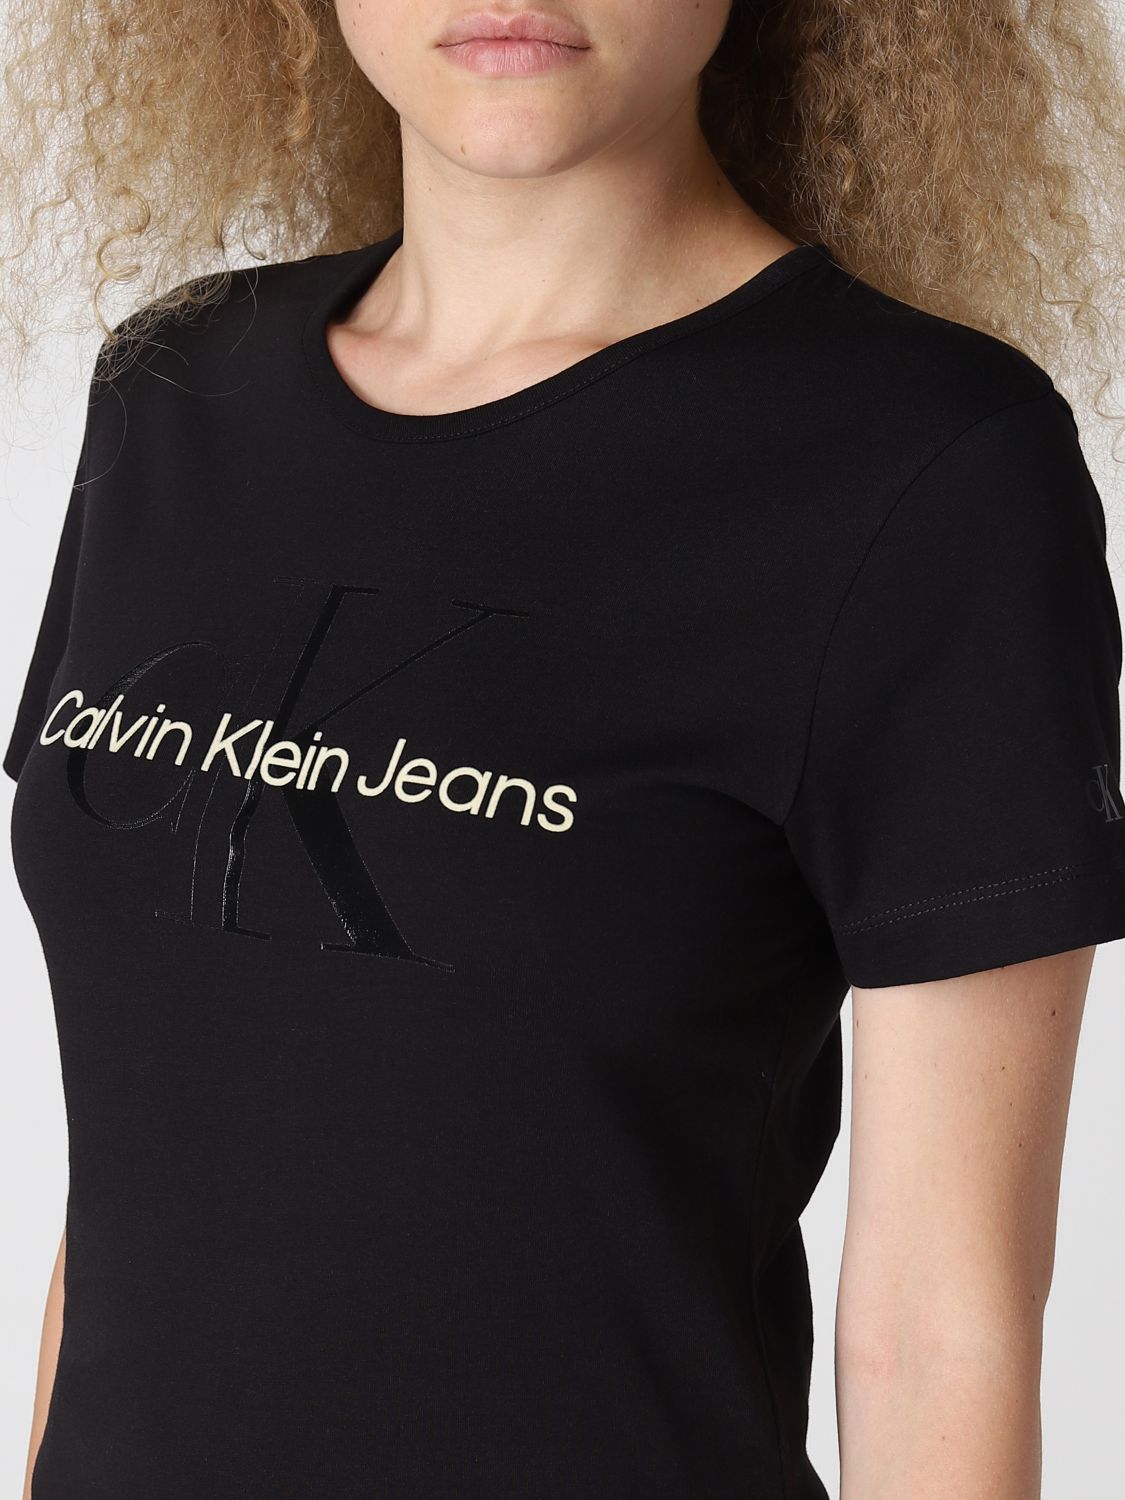 CALVIN KLEIN JEANS: t-shirt for woman - Black | Calvin Klein Jeans t-shirt  J20J218996 online at